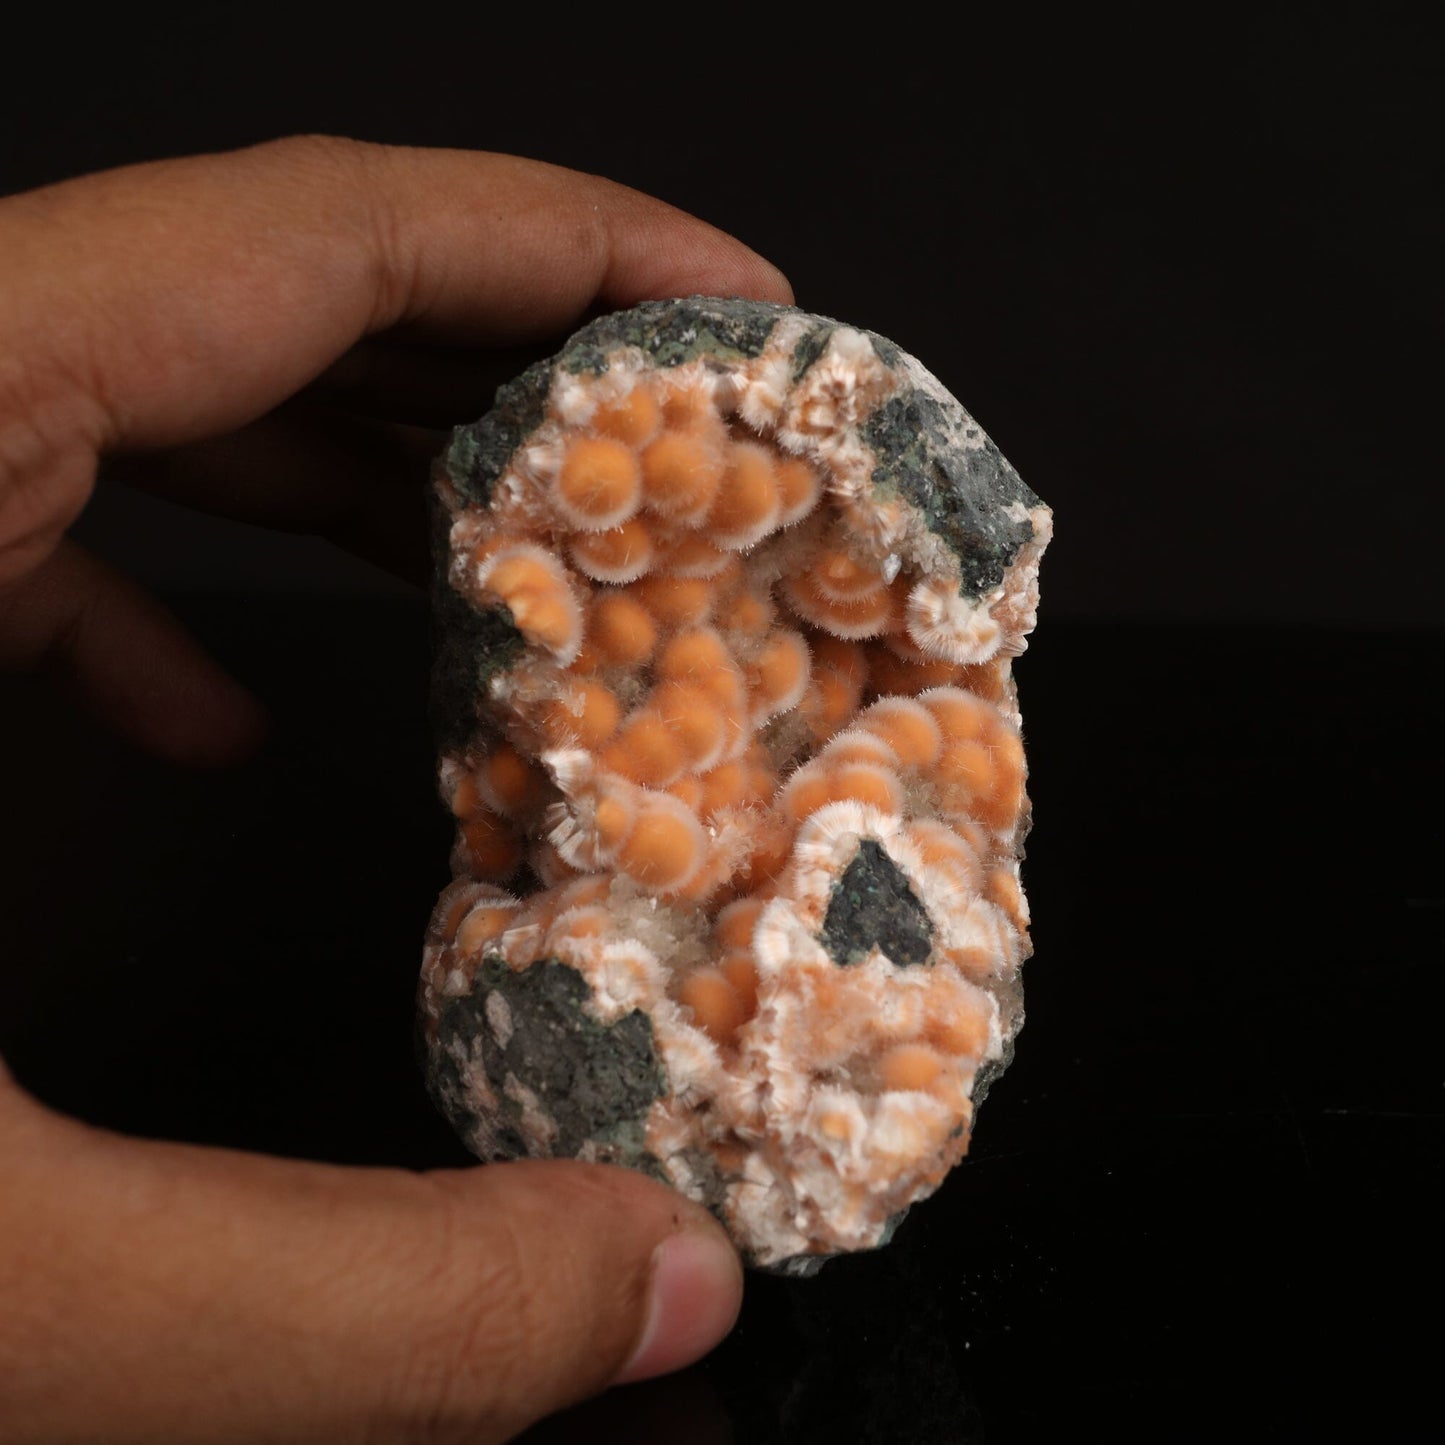 Thomsonite Orange Rare Find Free Standing Natural Mineral Specimen # B 6629 Thomsonite Superb Minerals 